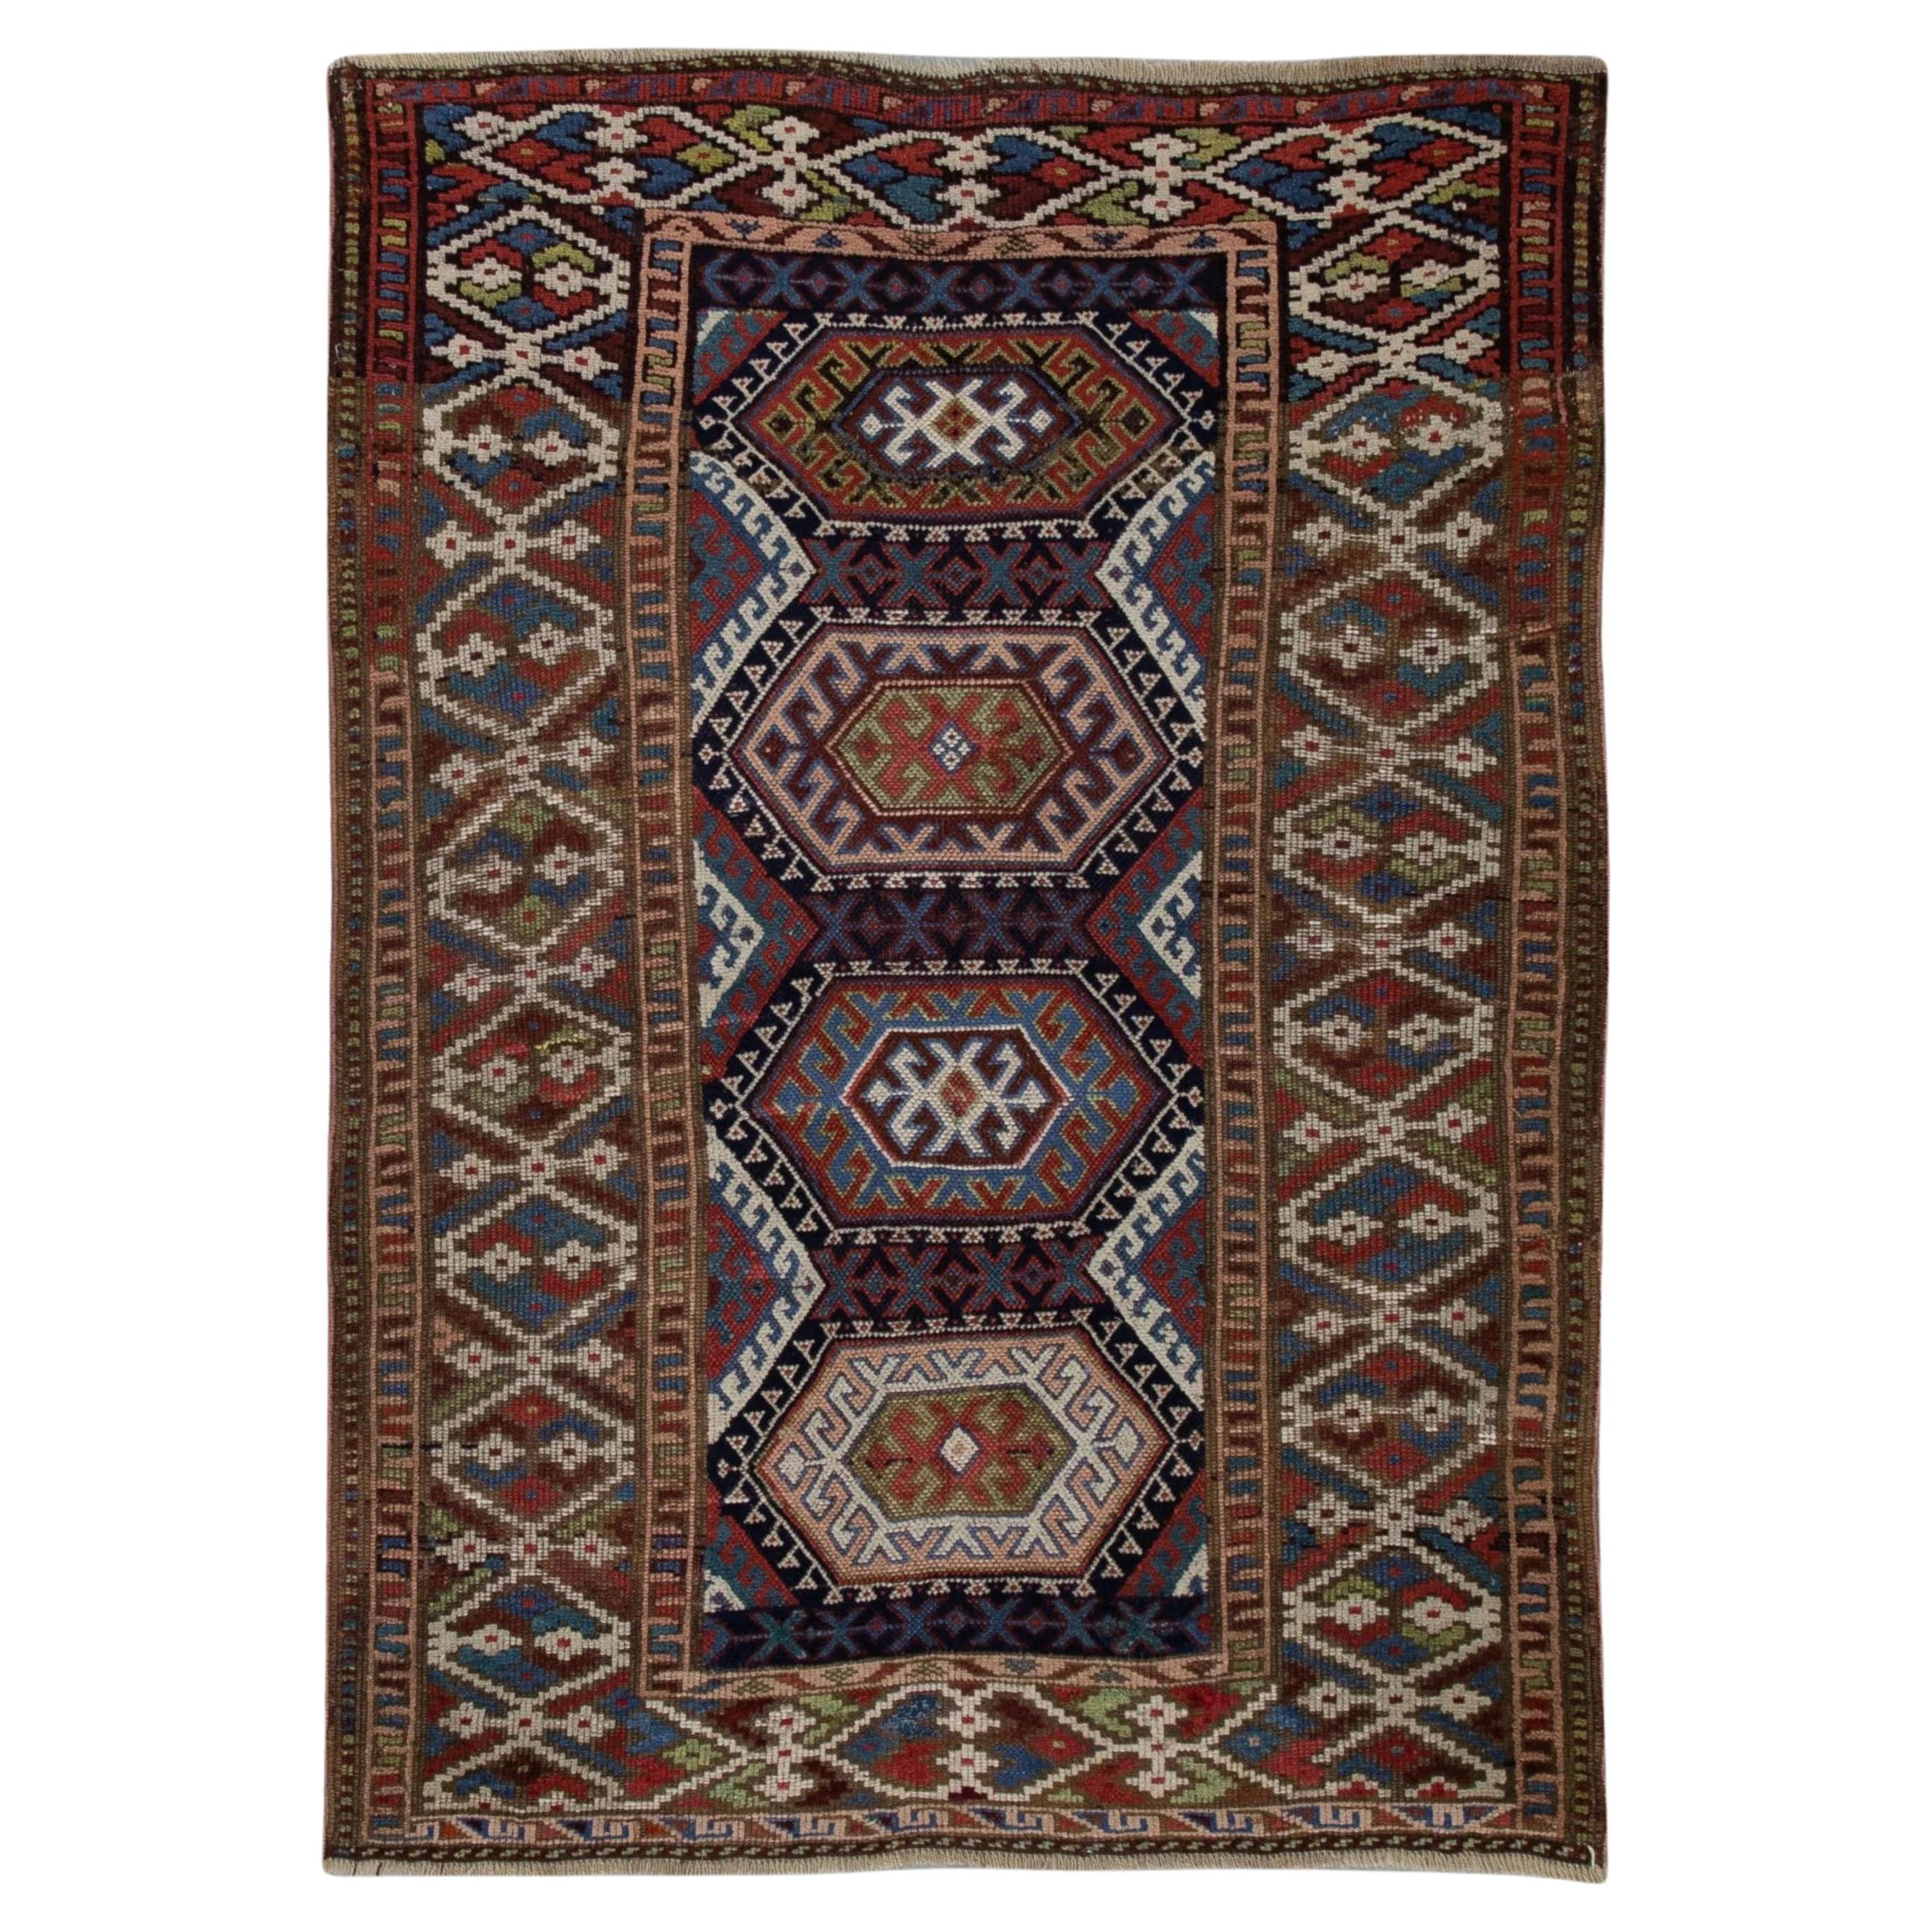 Multicolor Handwoven Wool Vintage Turkish Oushak Rug 4' x 5'8"